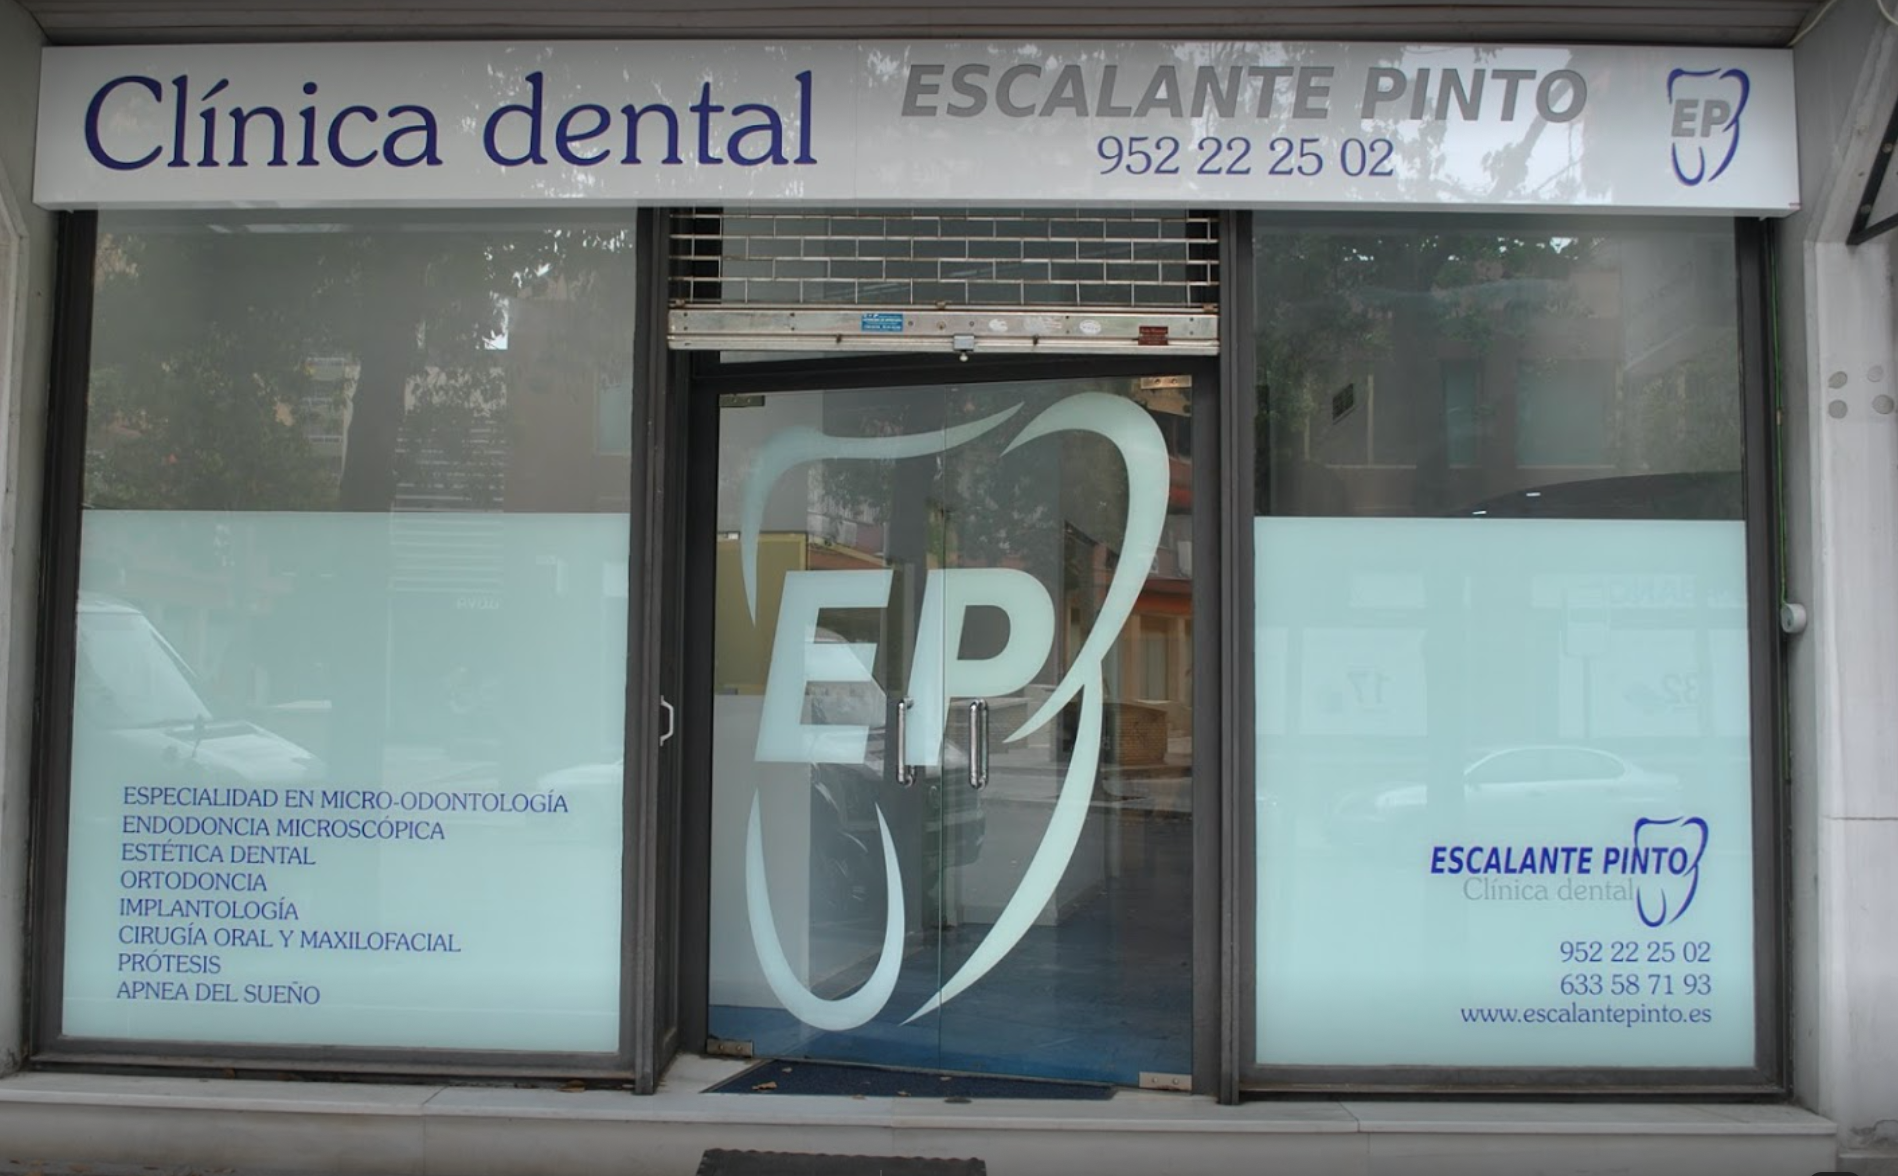 Estudio Dental en Málaga Lola Escalante